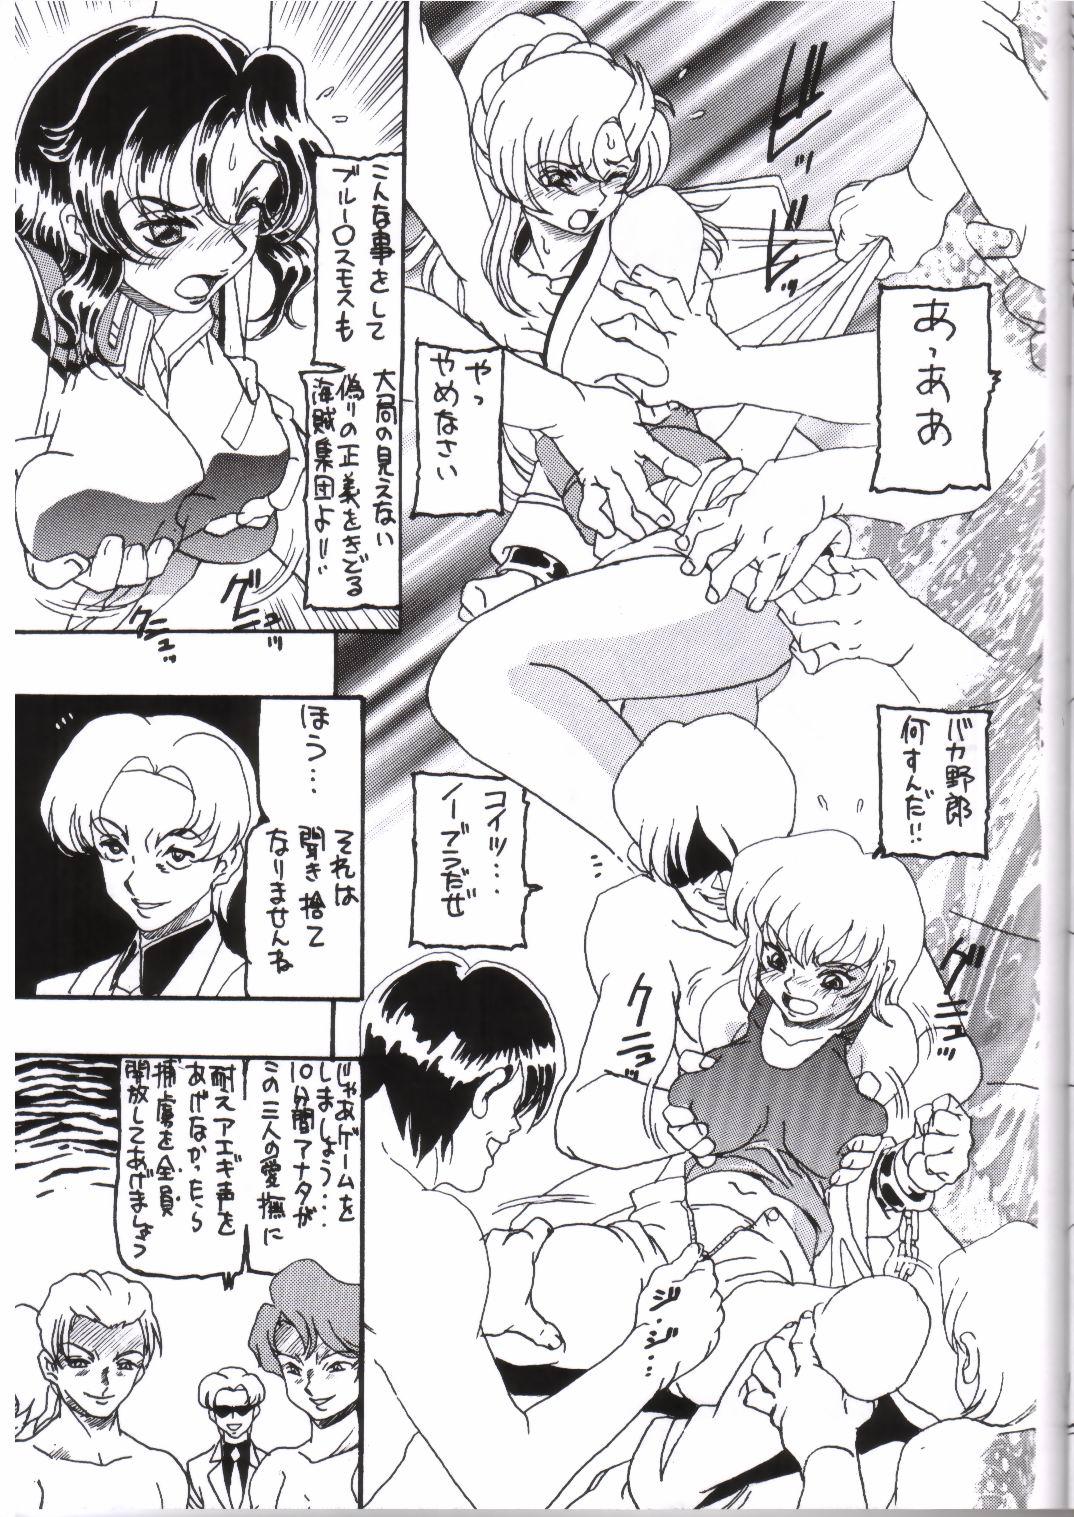 Calcinha Moon Shine 9 - Gundam seed Belly - Page 8